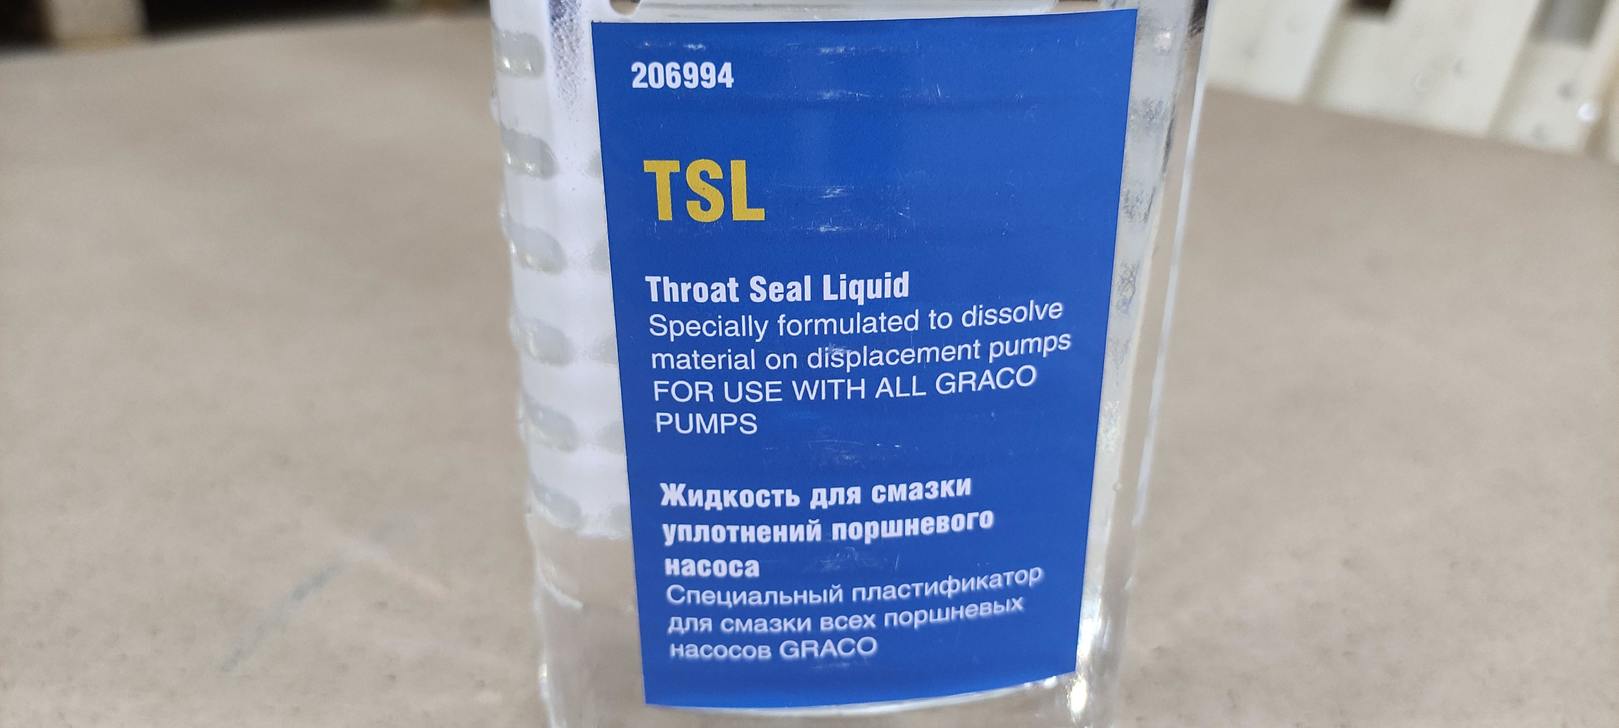 Масло TSL для смазки штока поршня окрасочного аппарата 1 л